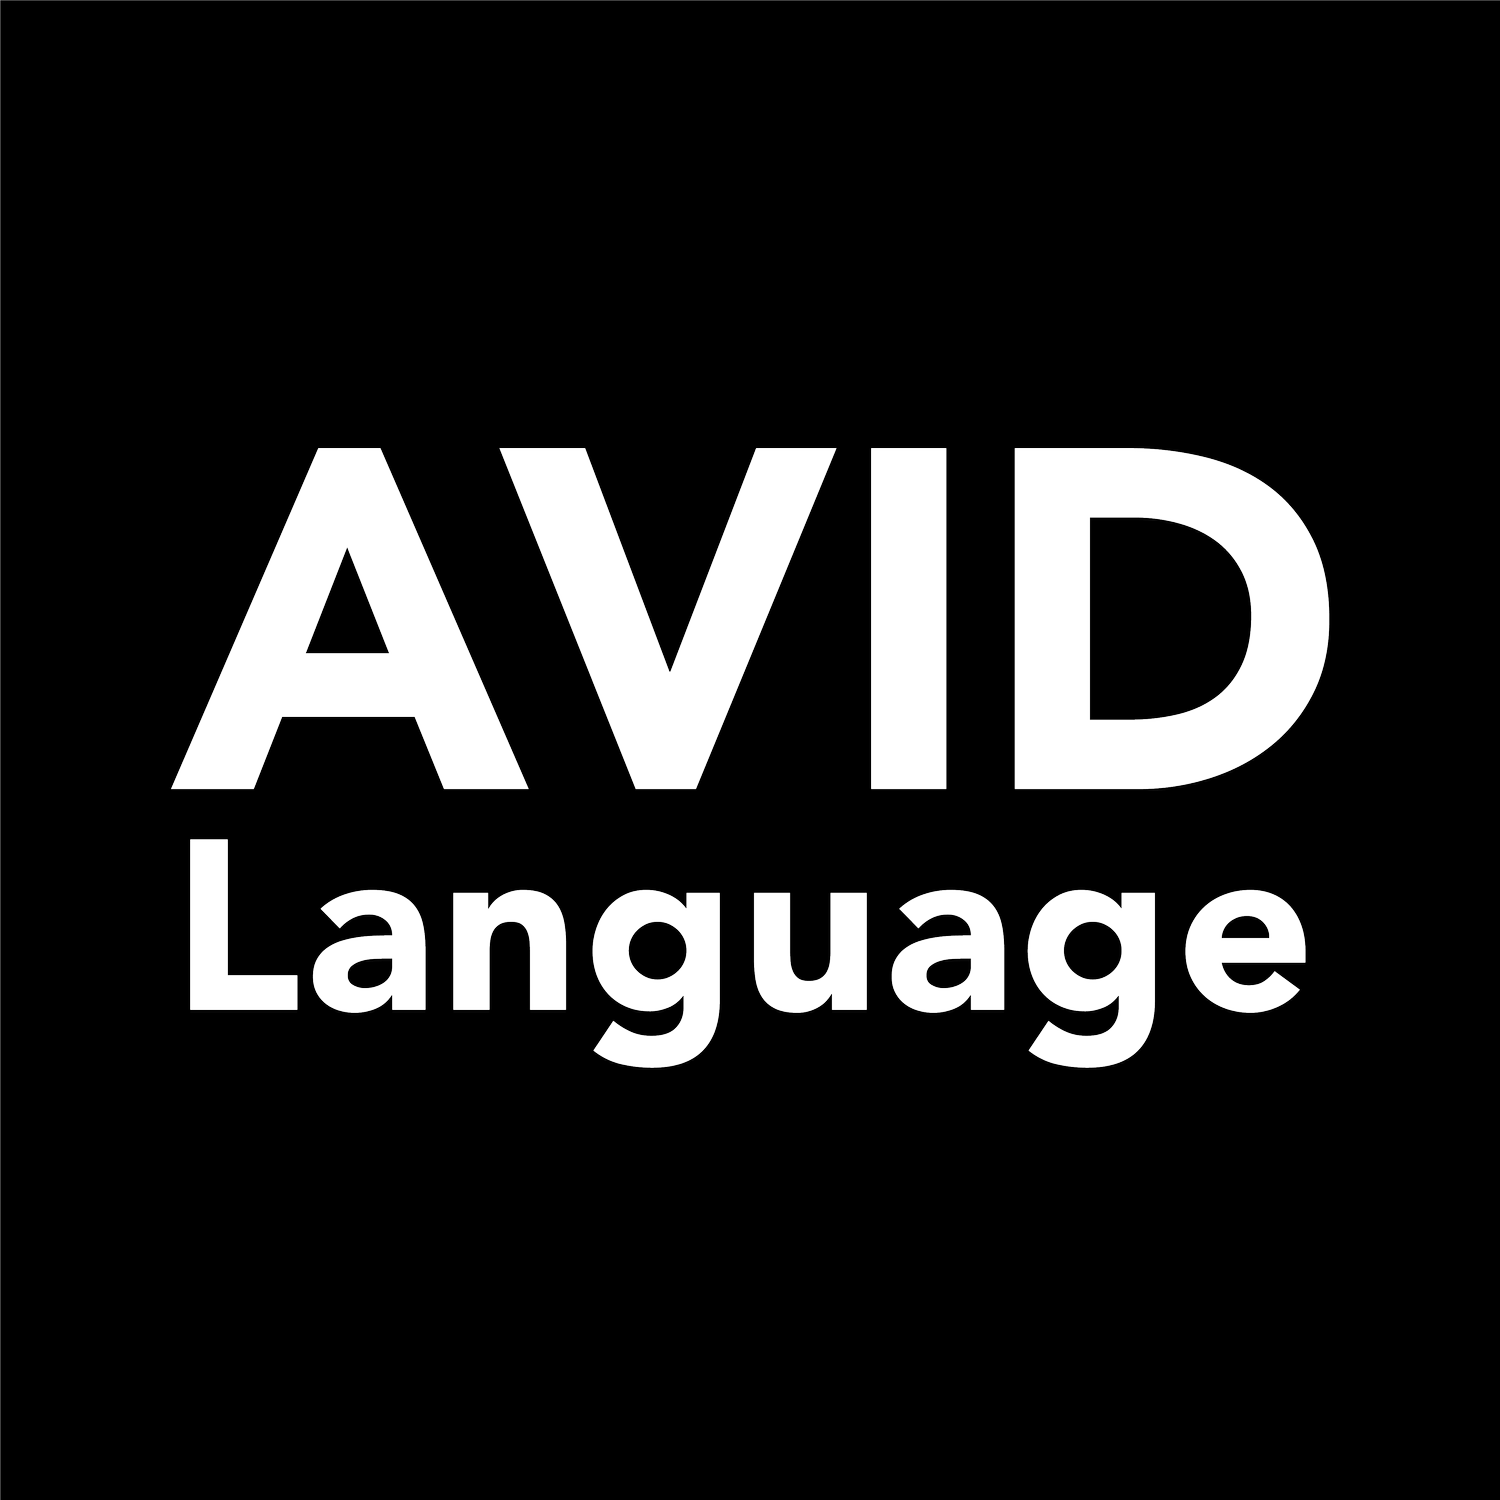 AVID Language